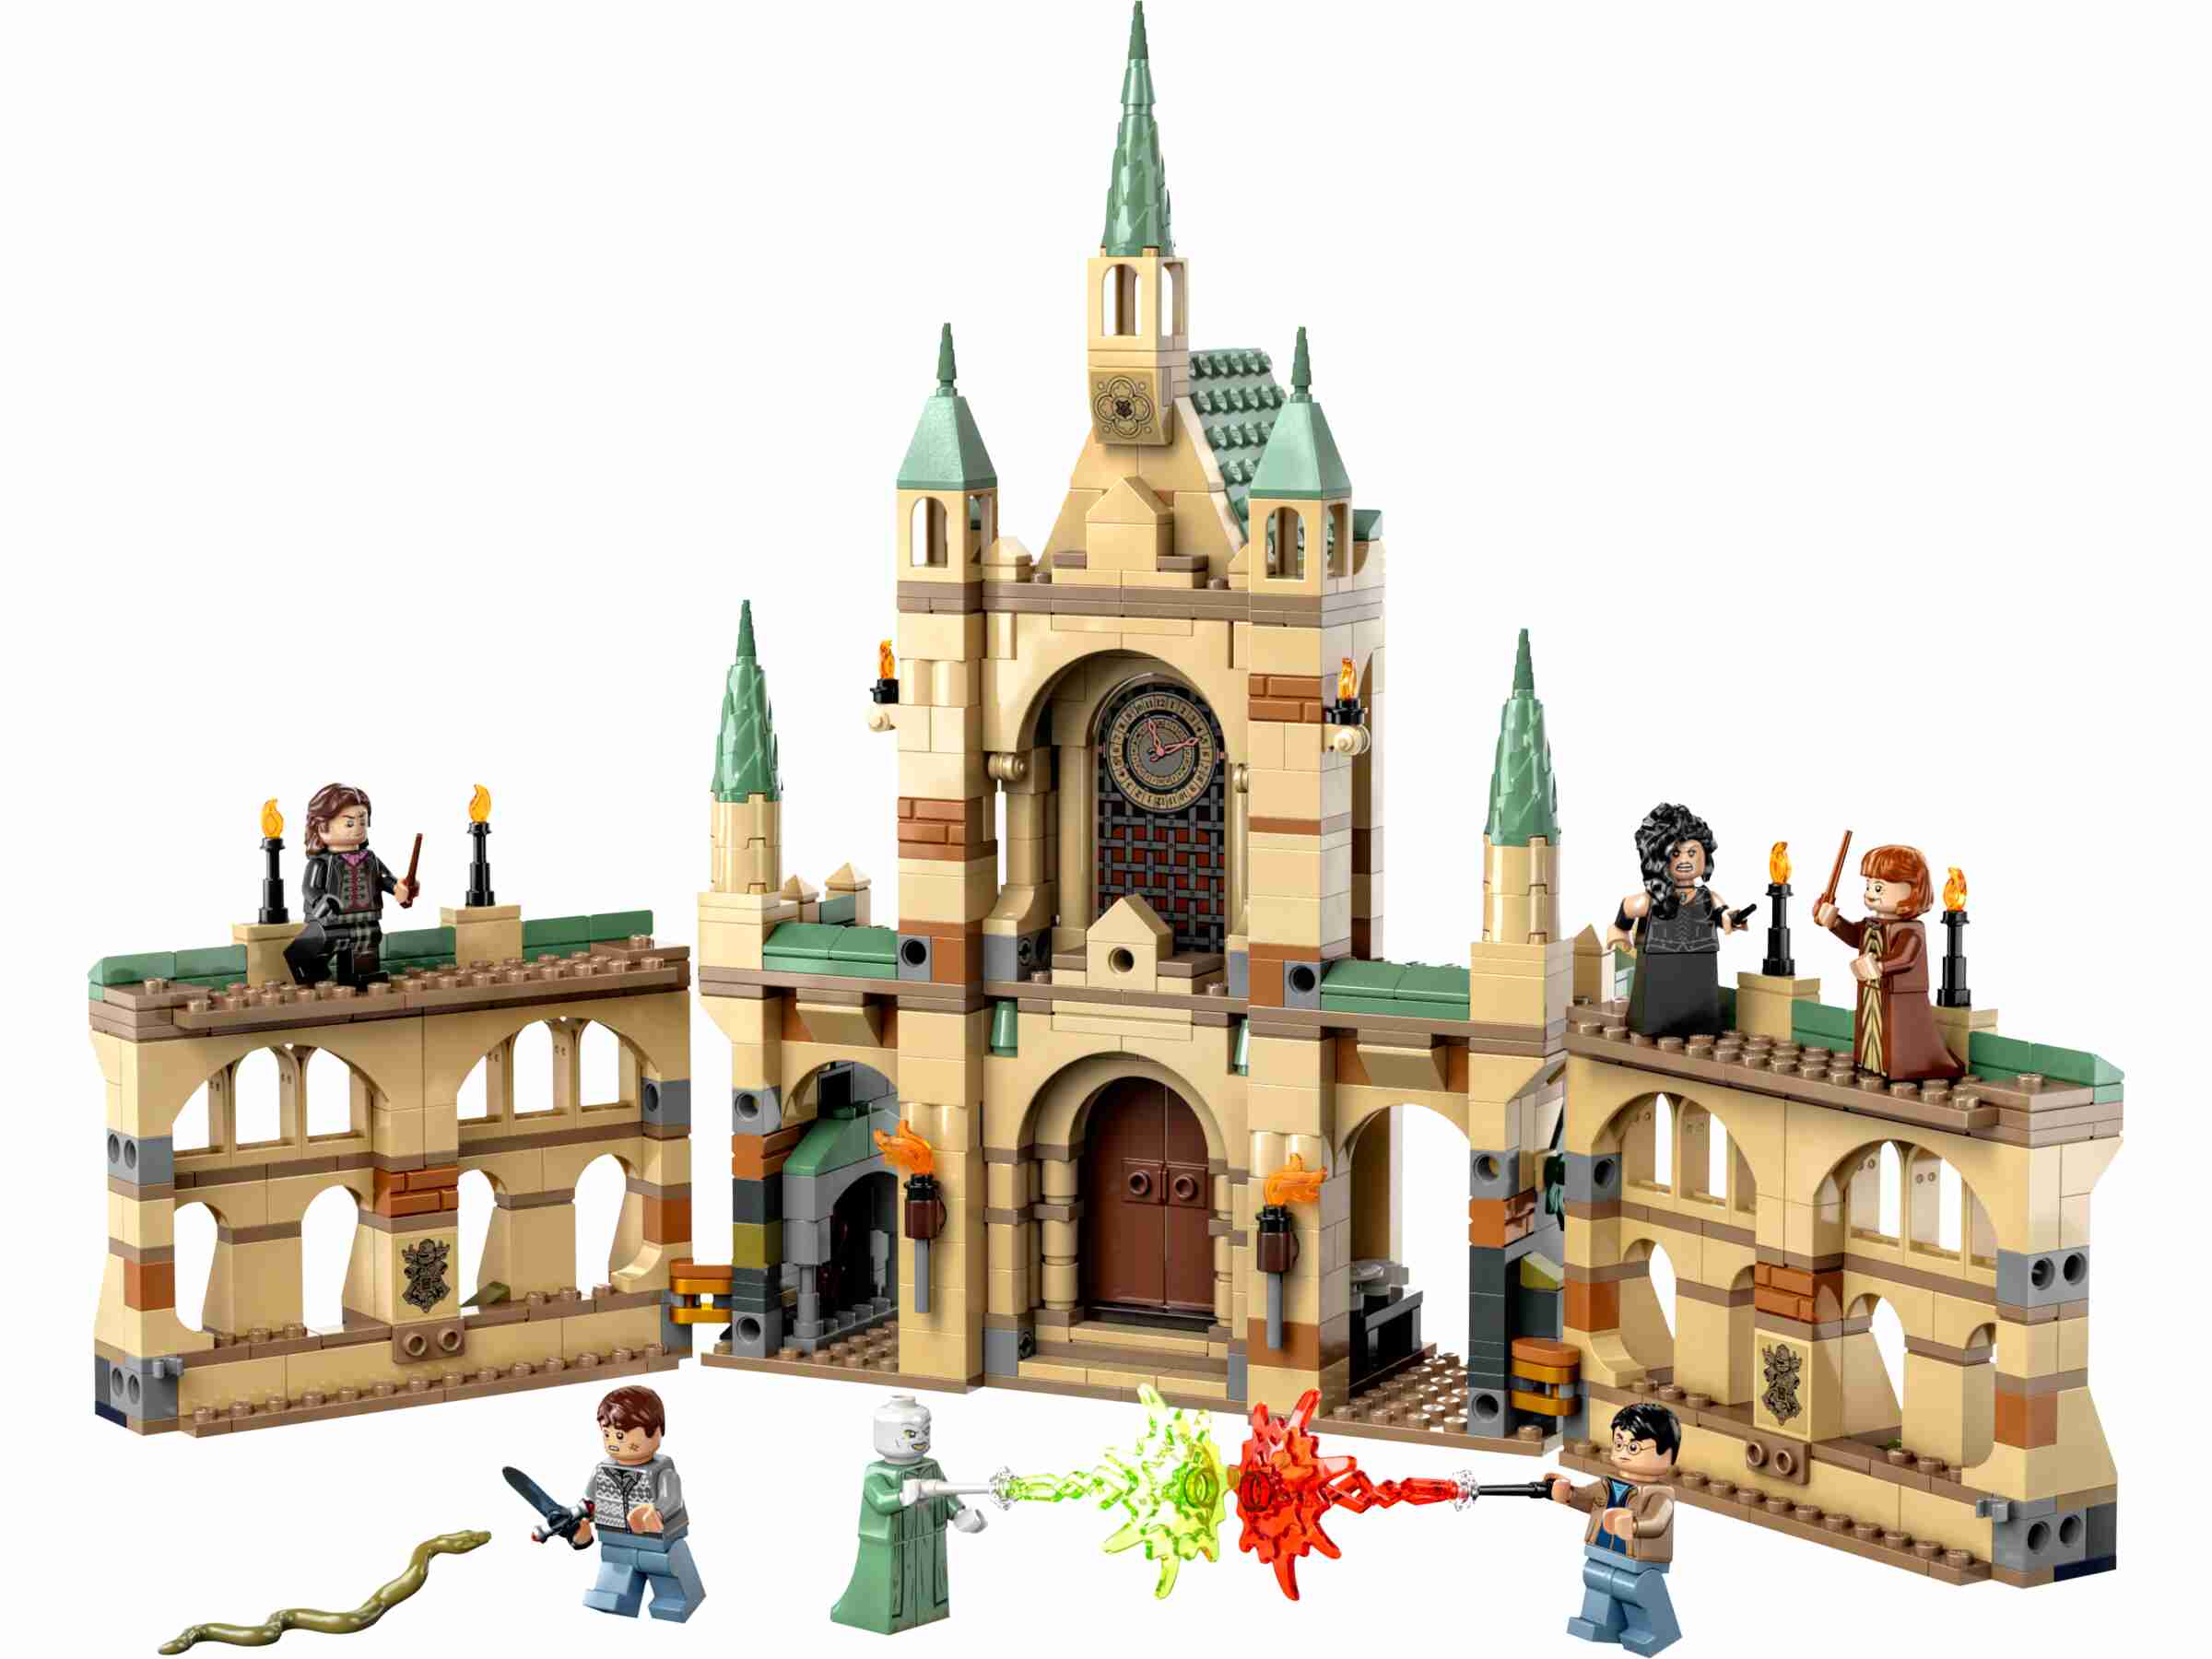 LEGO 76415 Harry Potter Der Kampf um Hogwarts, 6 Minifiguren und Nagini